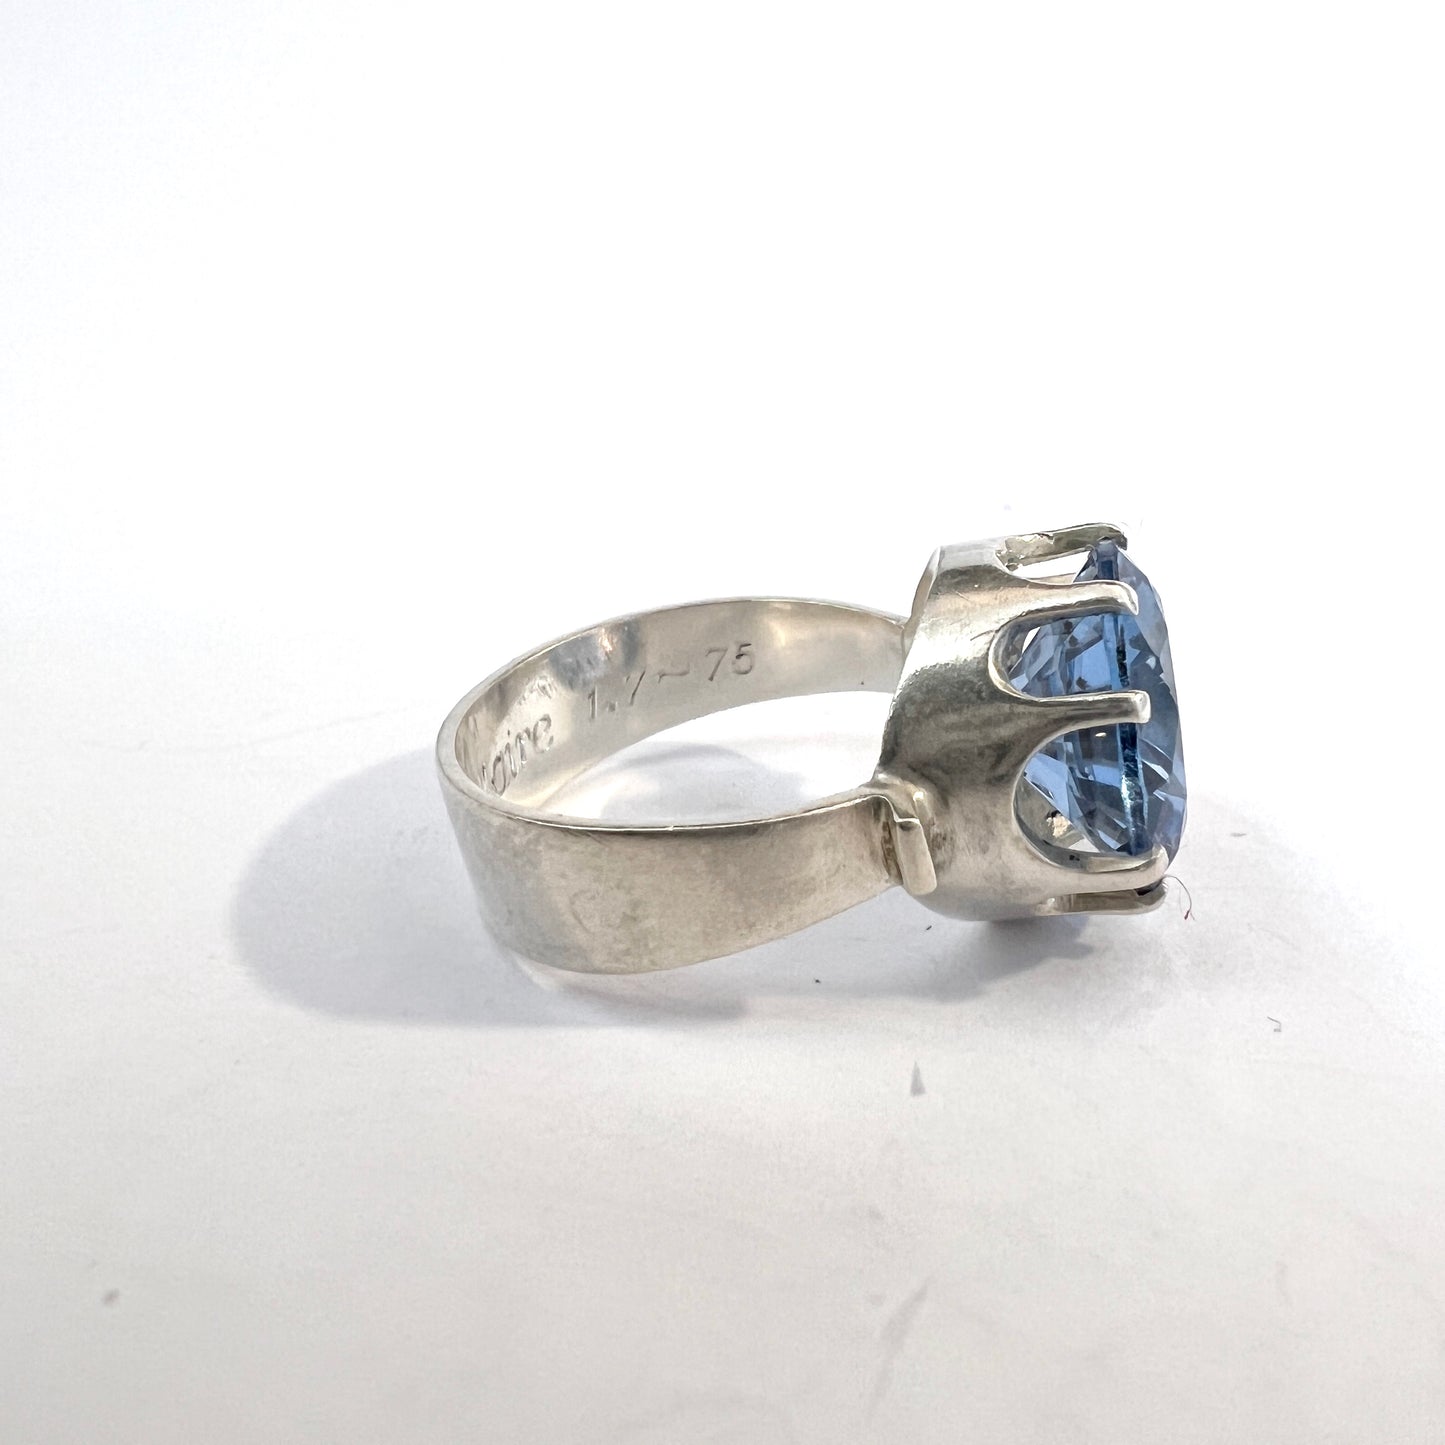 Kultakeskus, Finland 1974. Vintage Solid Silver Intense Blue Synthetic Spinel Ring.